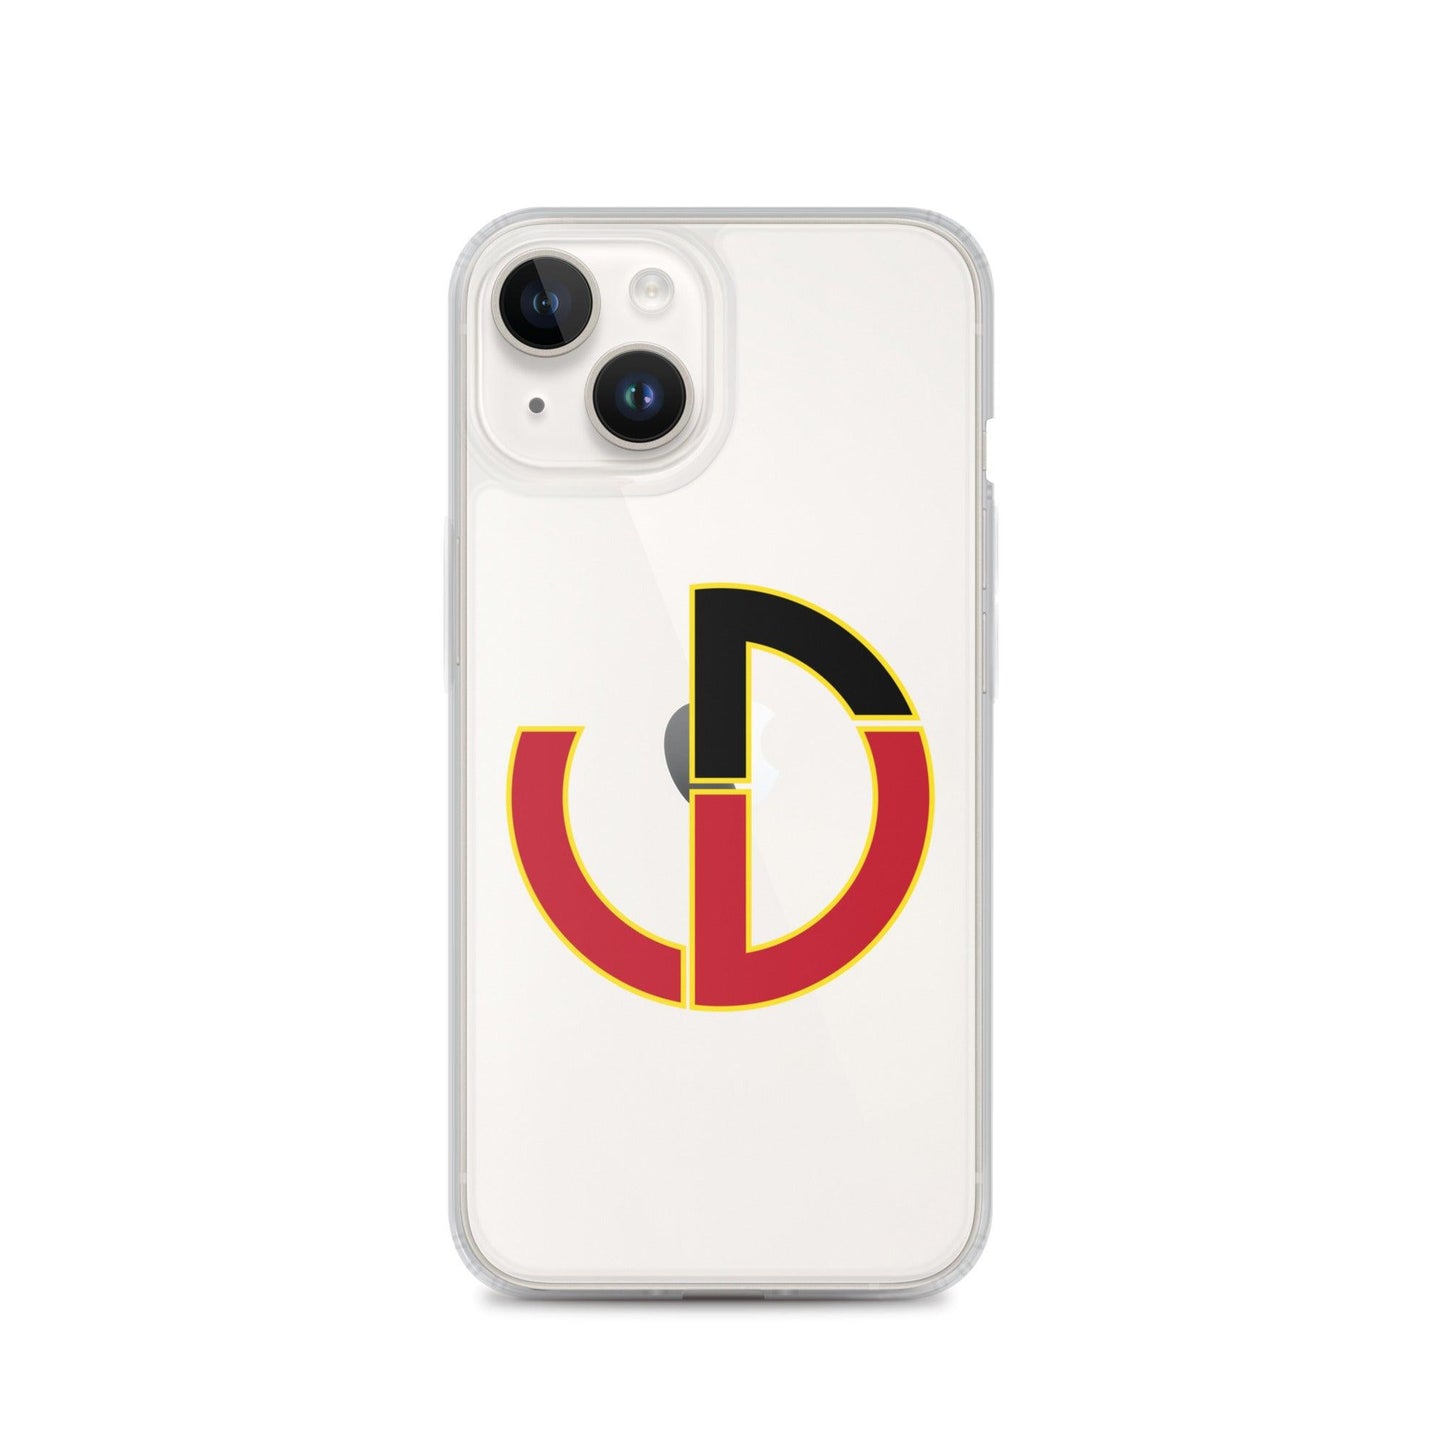 DeAnna Wilson "Essential" iPhone Case - Fan Arch